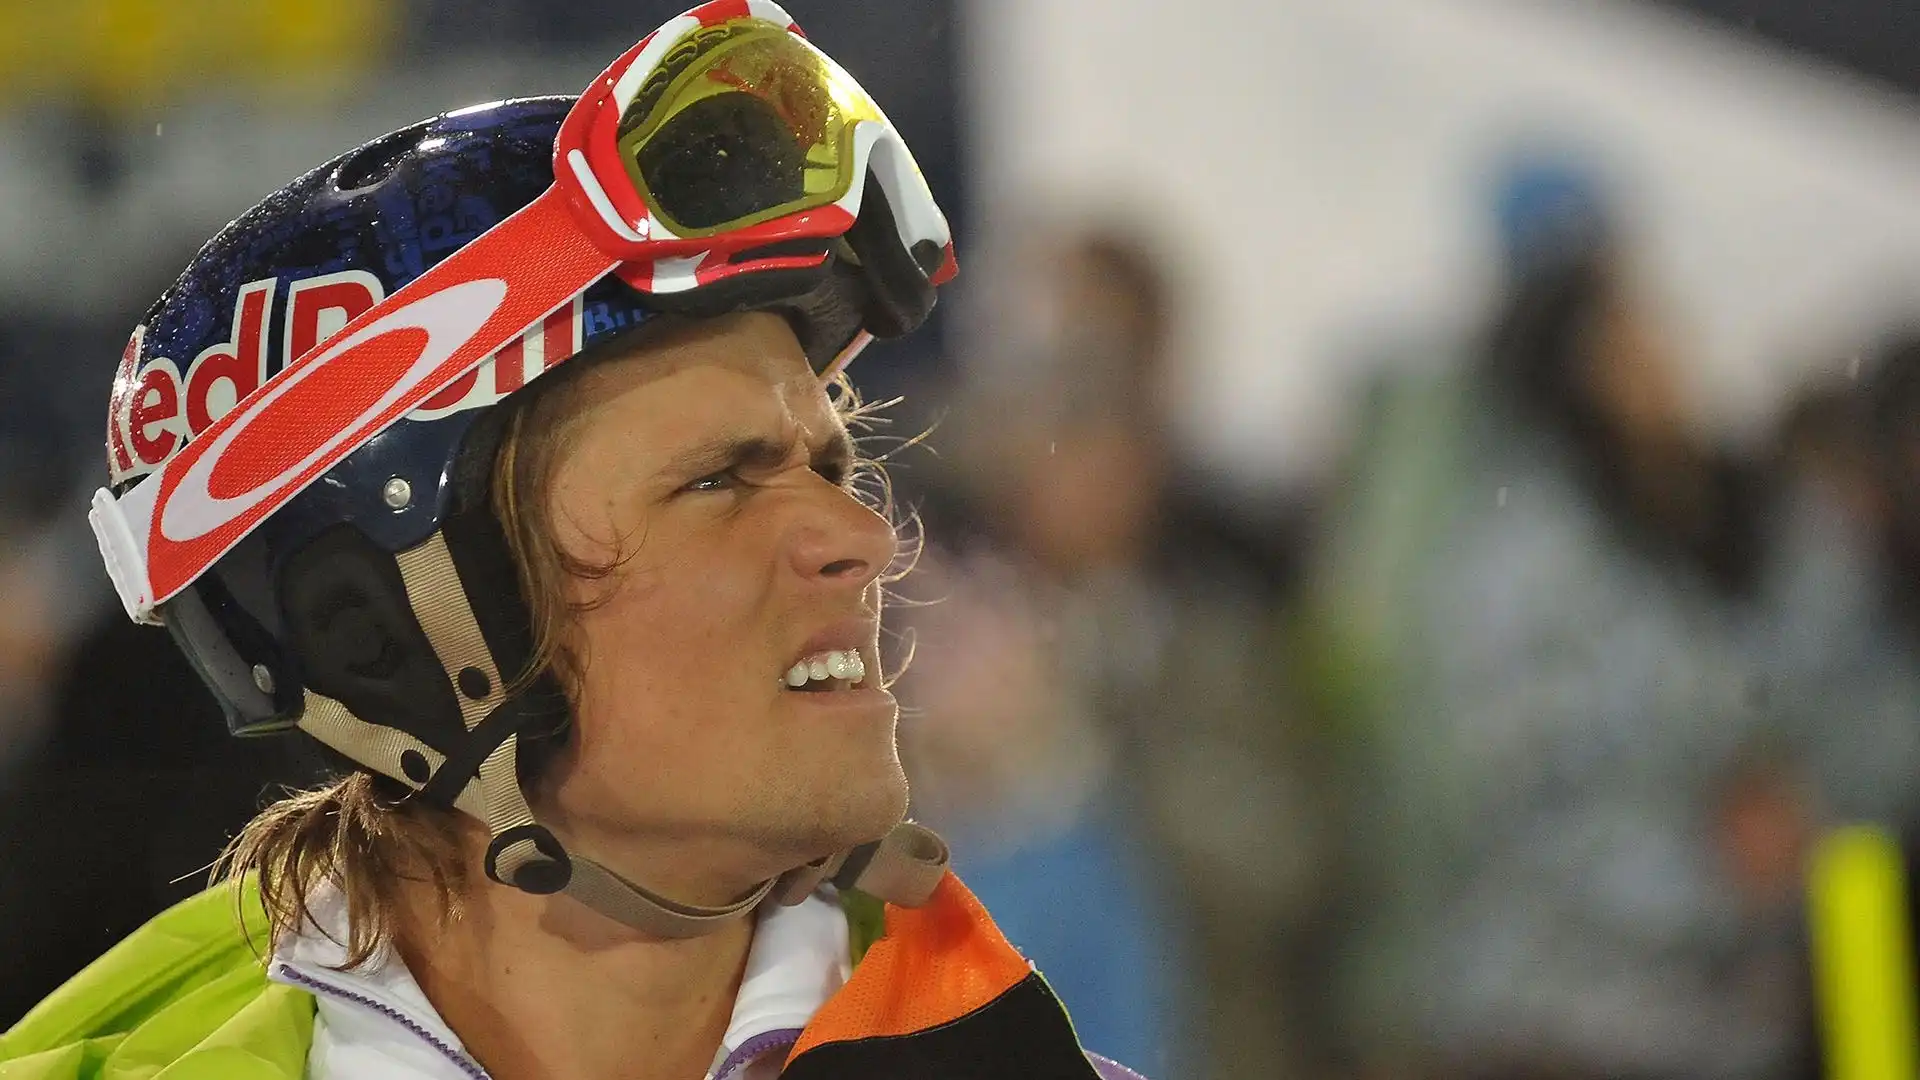 Jon Olsson (Svezia): patrimonio stimato 8 milioni di dollari. Ex sciatore freestyle